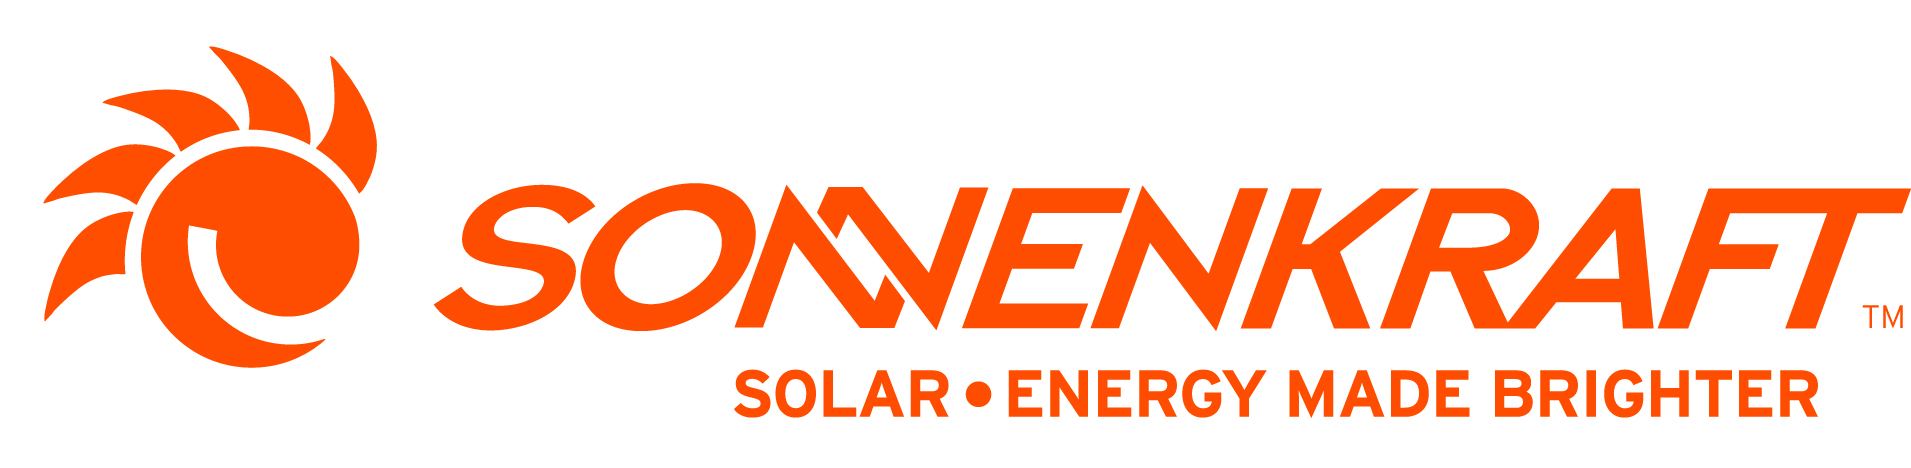 Sonnenkraft-Logo.jpg